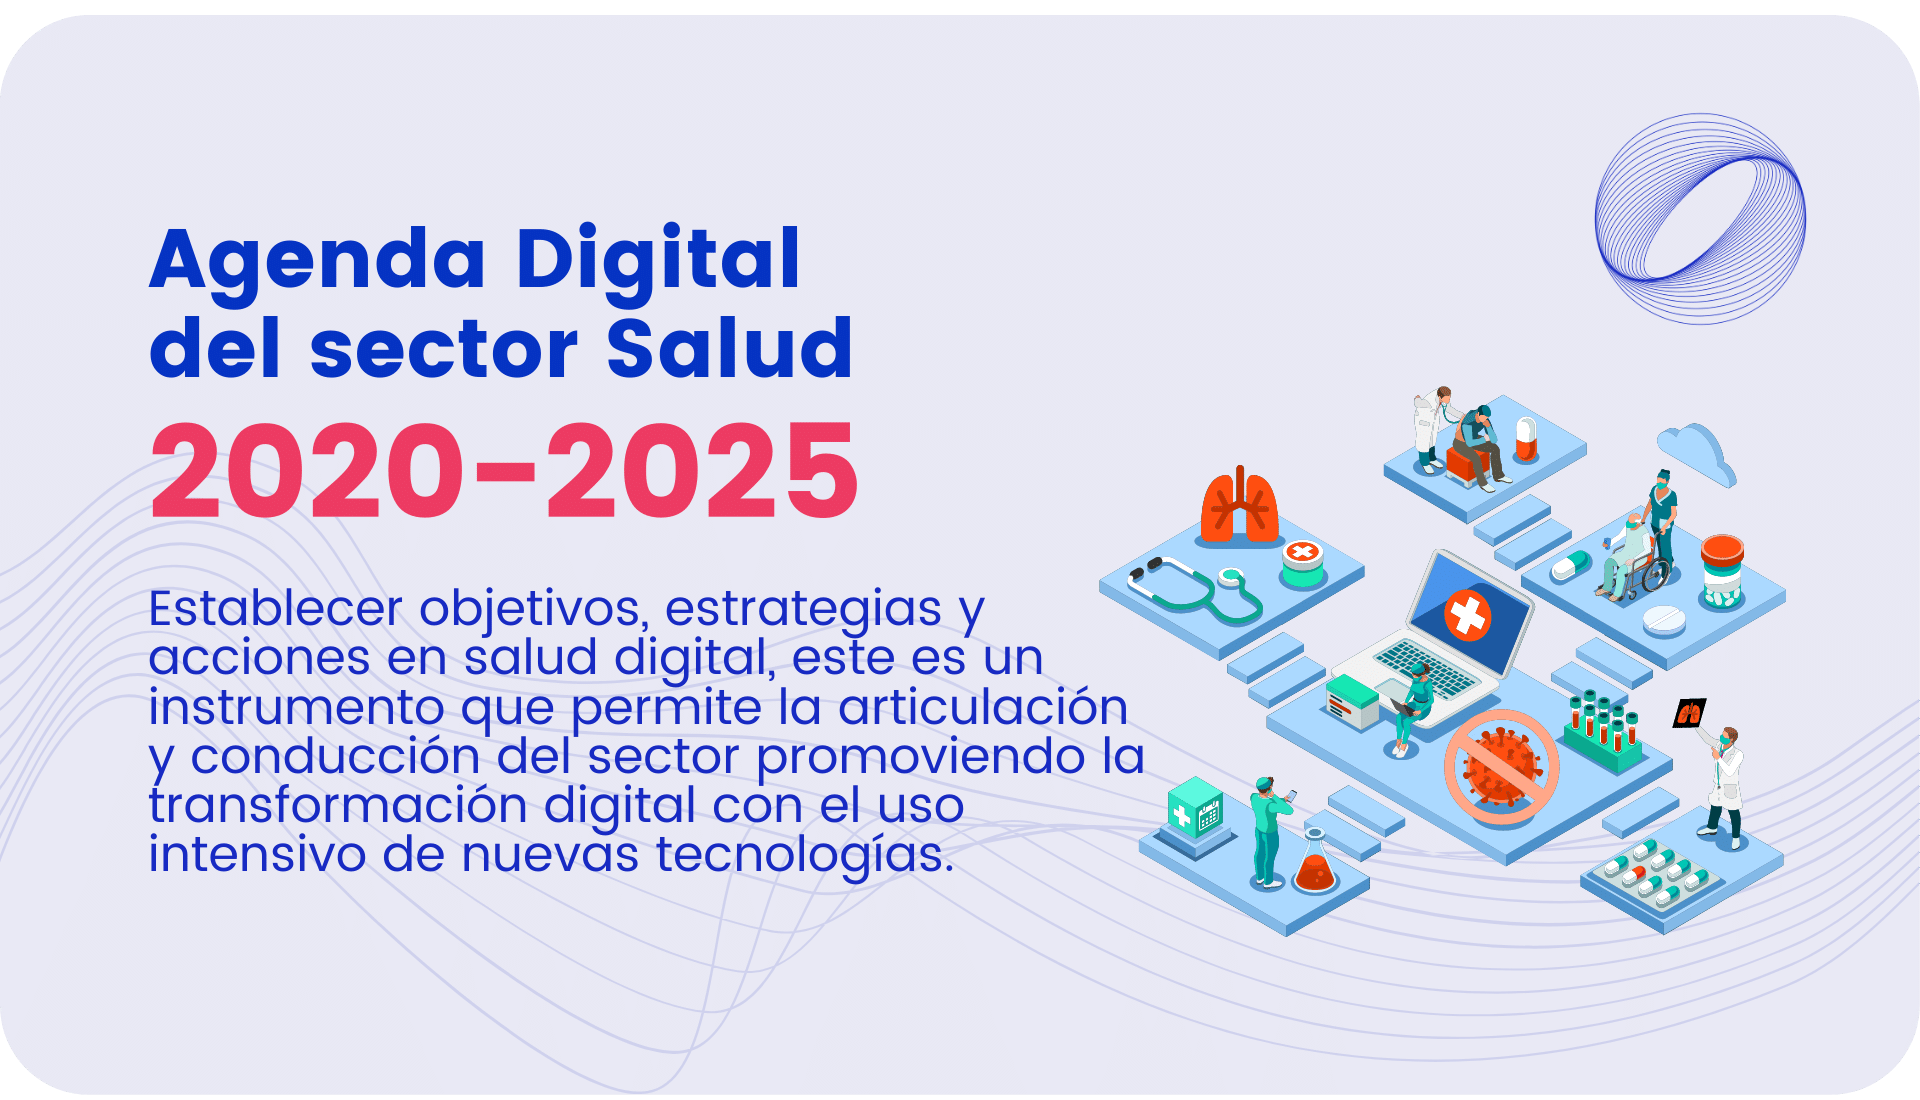 Agenda Digital del sector Salud